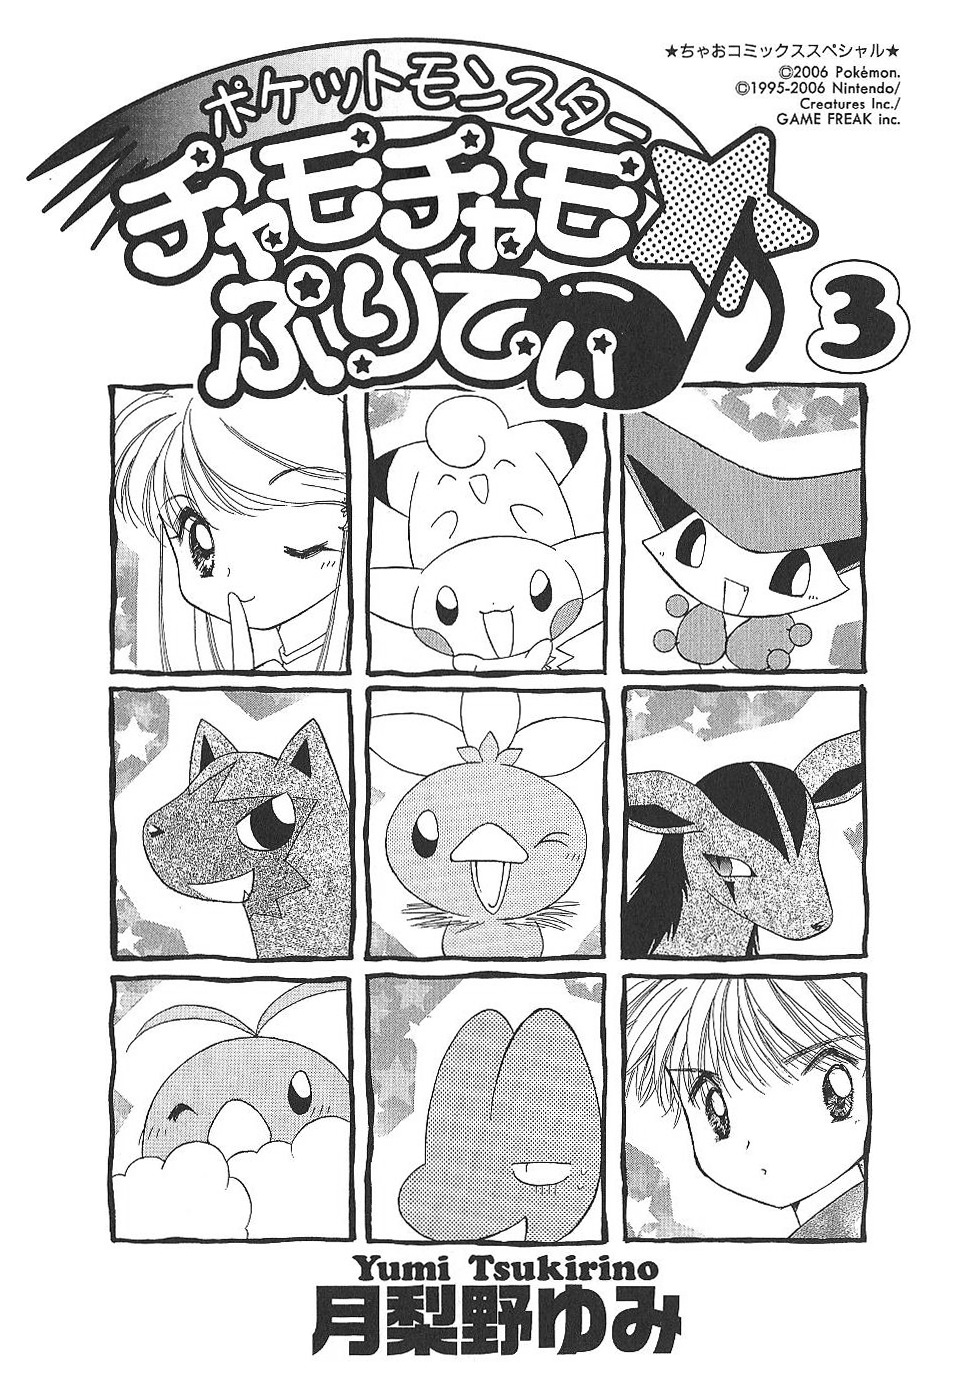 Pokémon Chamo-Chamo ☆ Pretty ♪ Vol.3 Chapter 28-42 - Picture 3